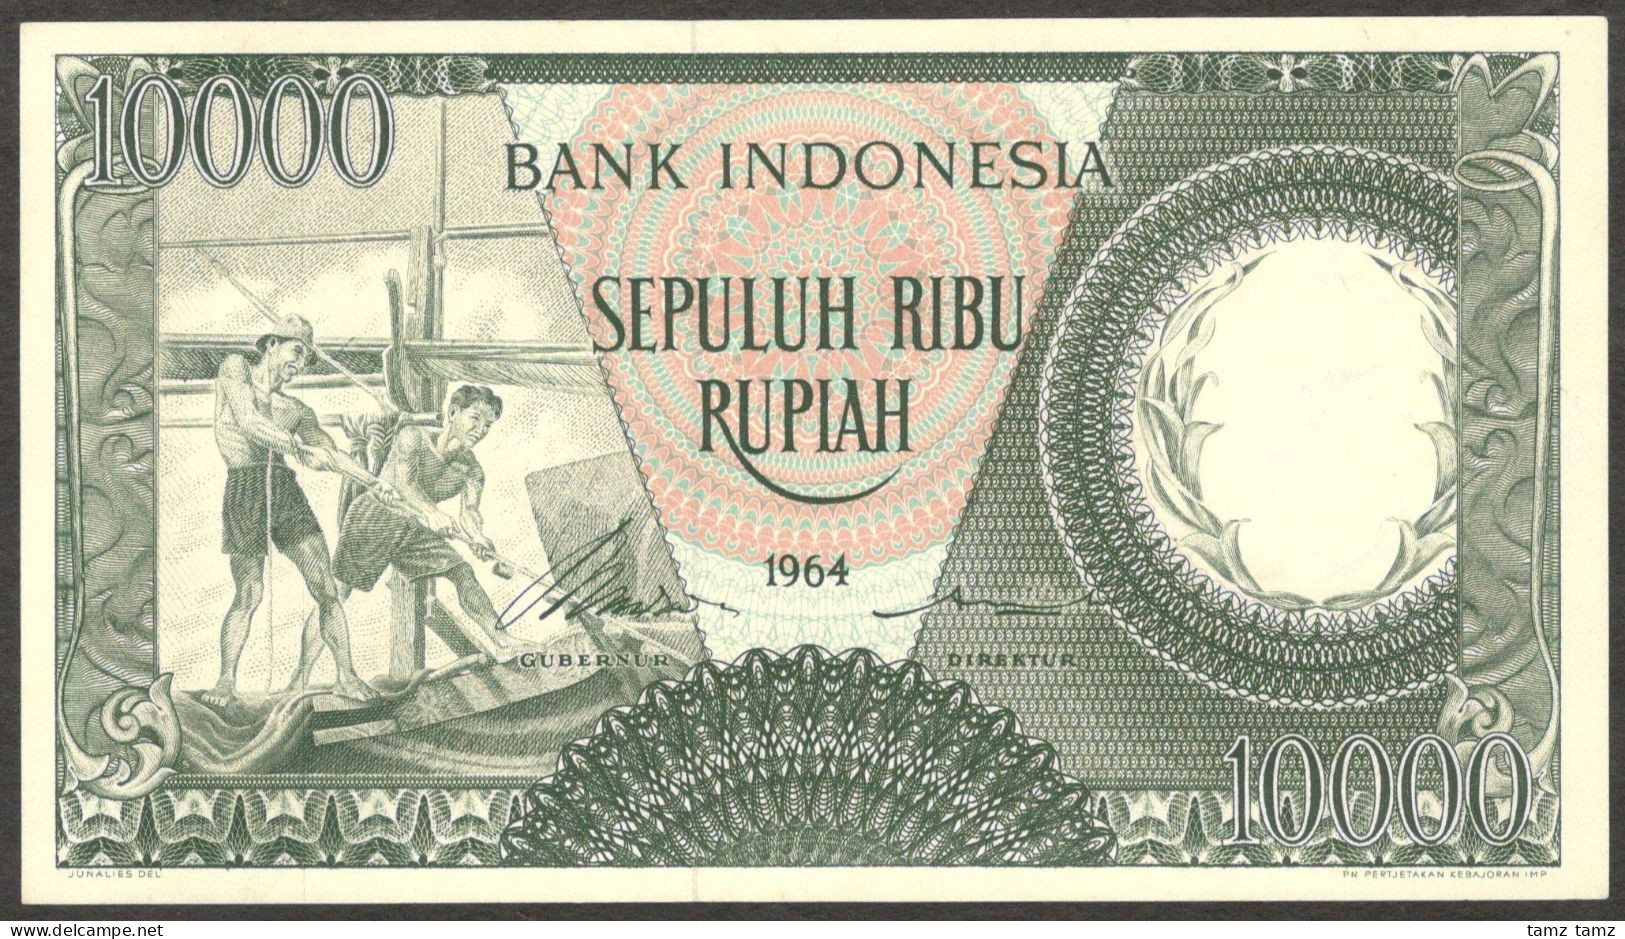 Indonesia 10000 10,000 Rupiah Green Fisherman P-100 1964 UNC - Indonésie